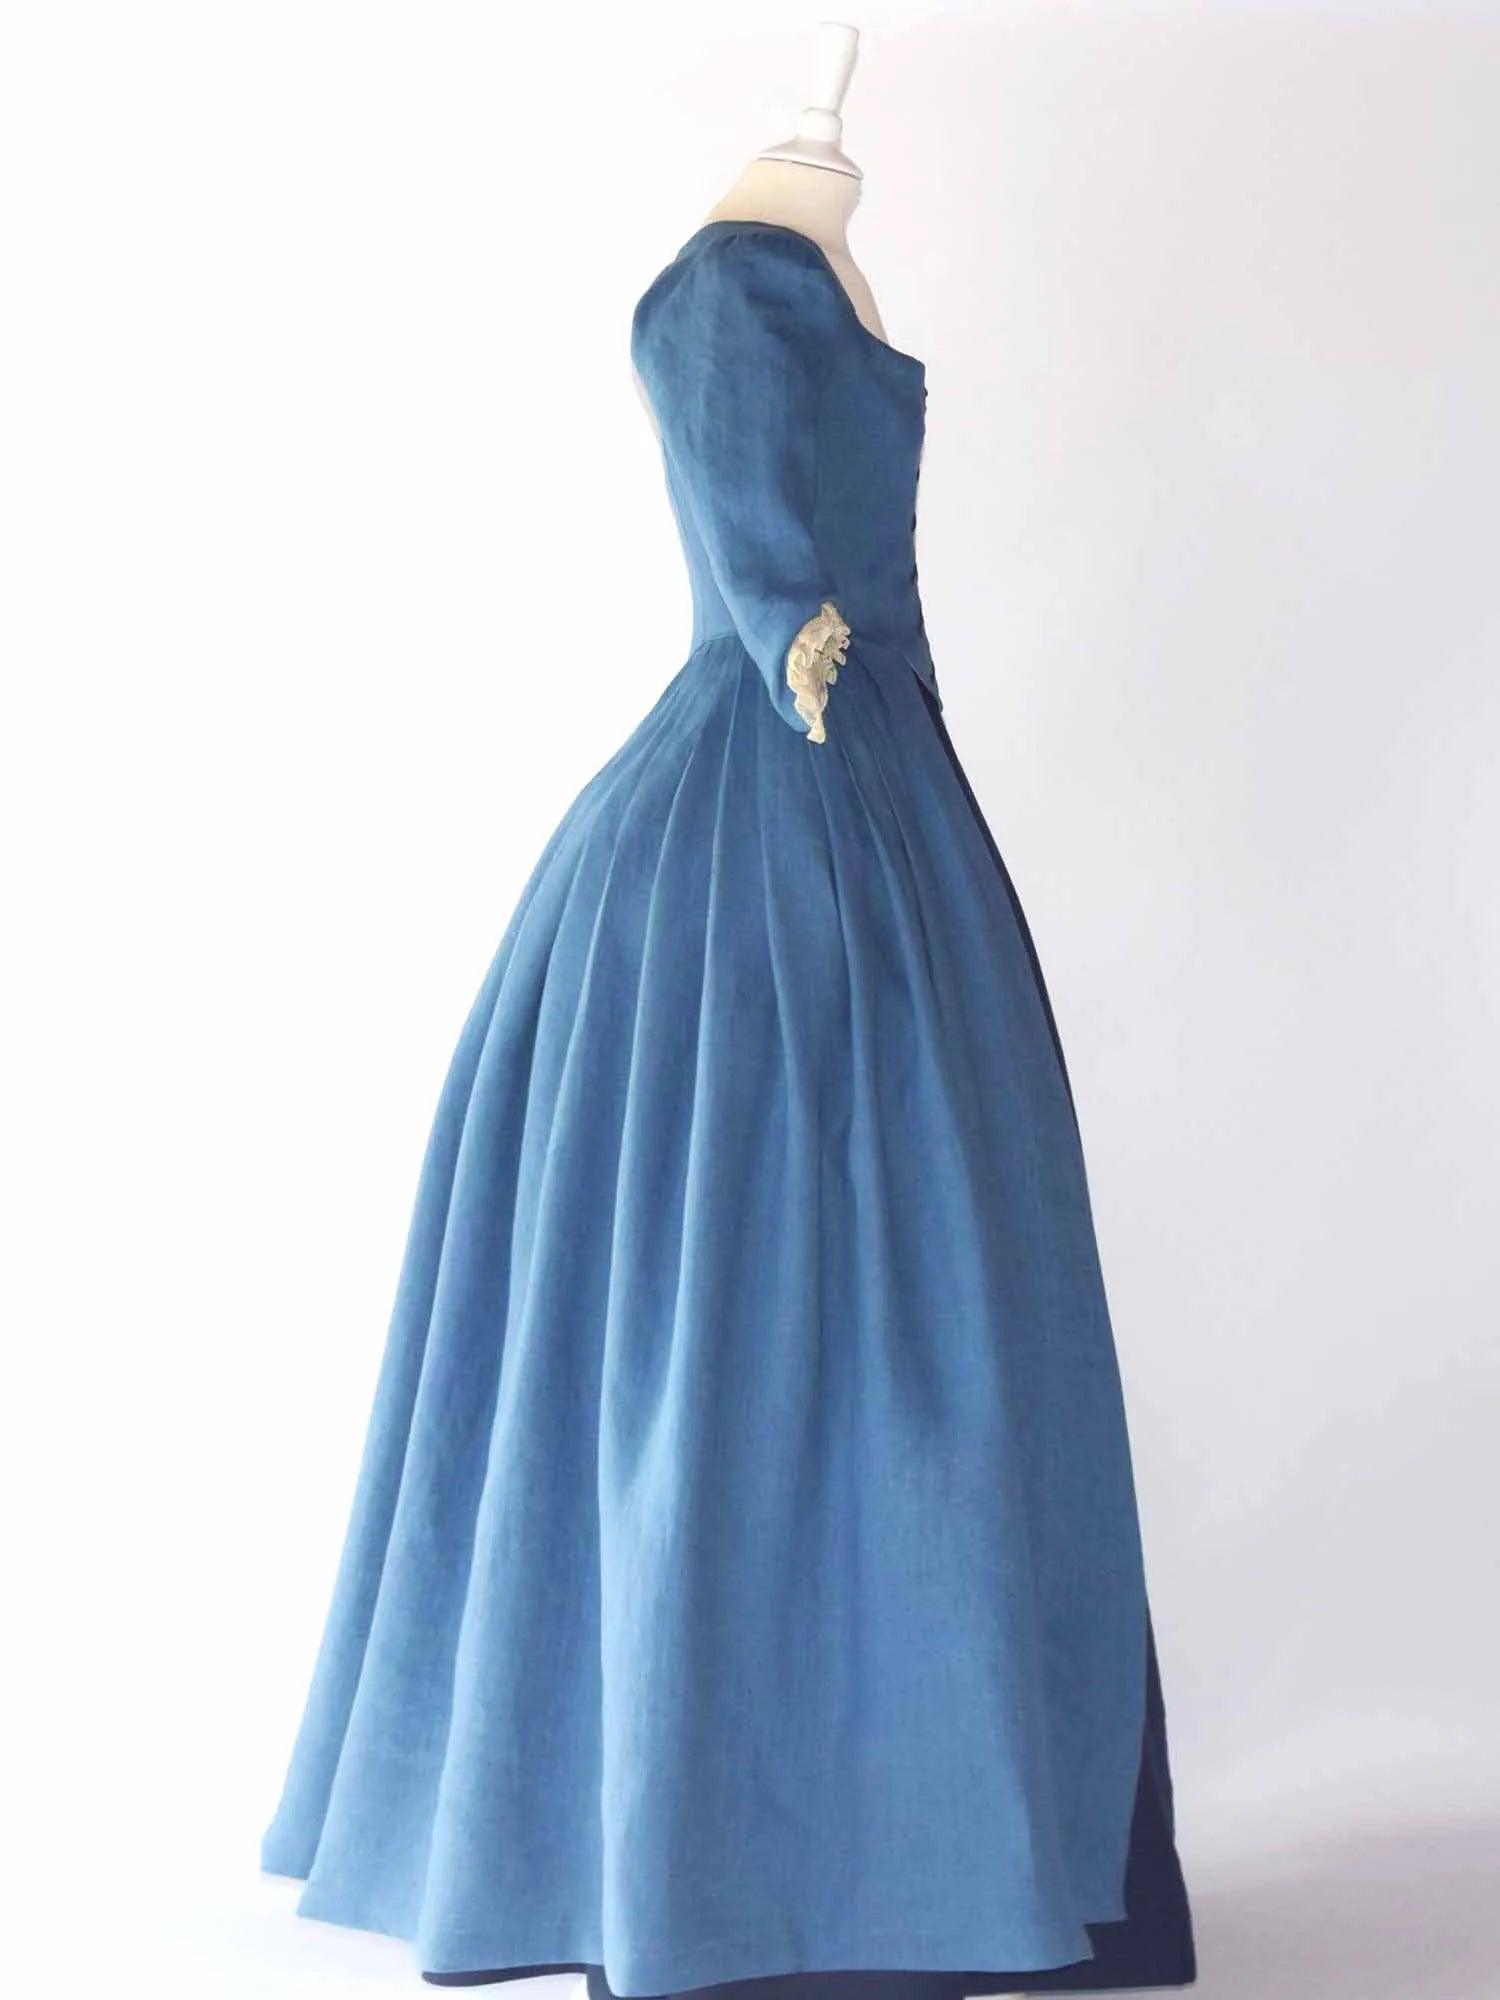 18th Century Overdress in Steel Blue Linen & Skirt - Atelier Serraspina